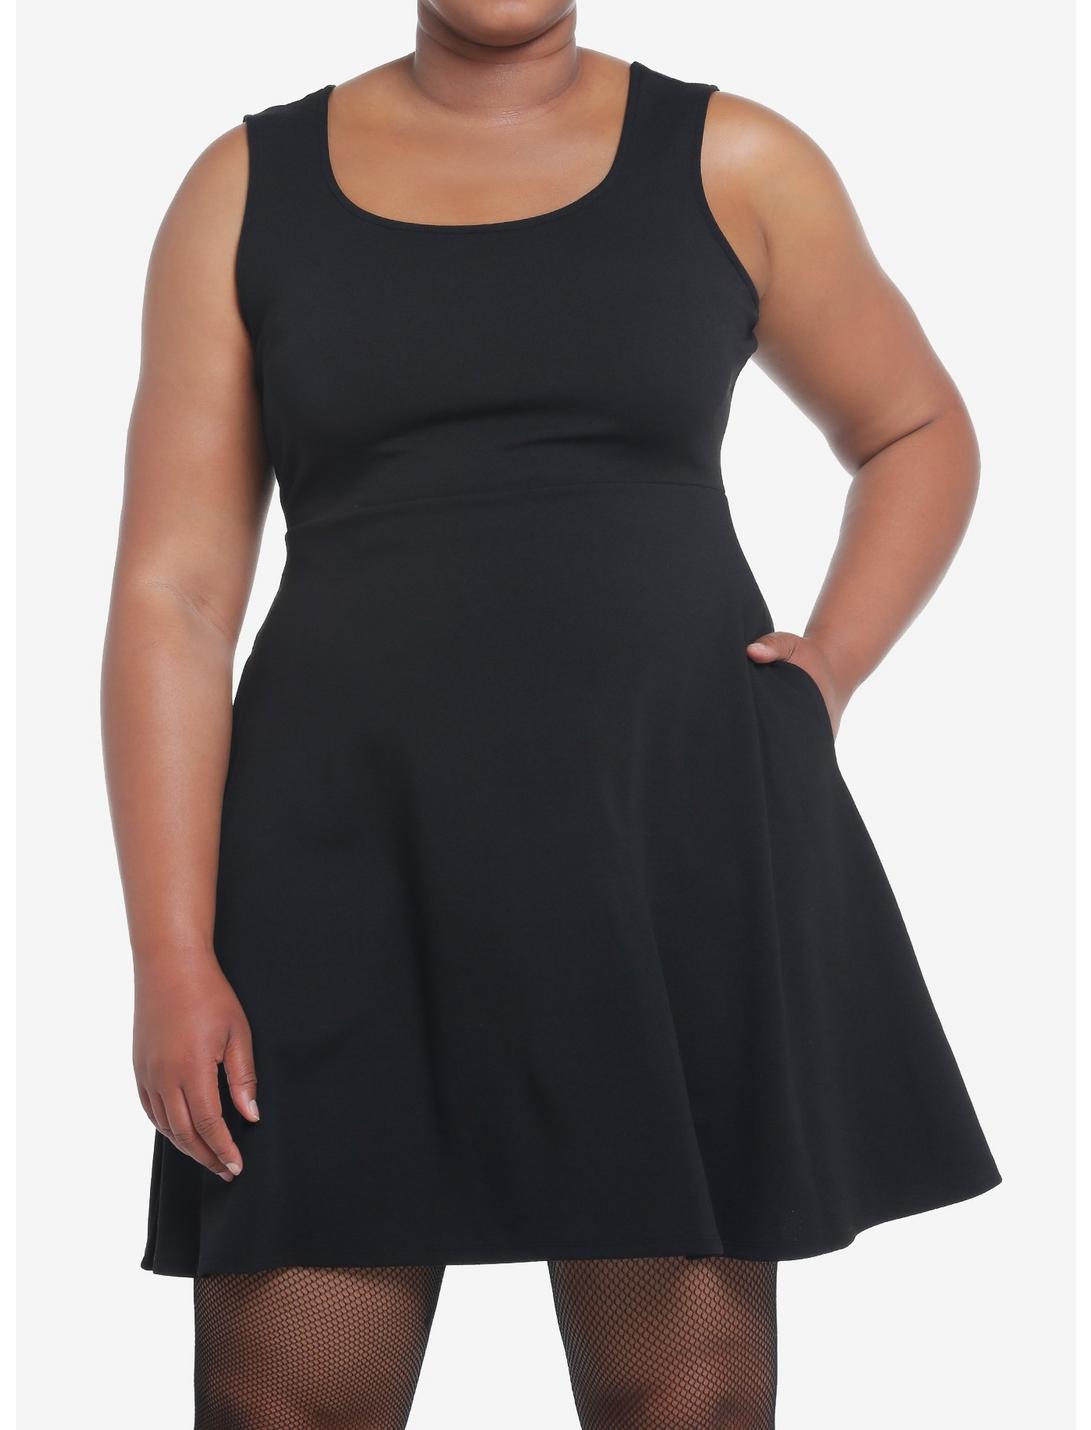 Cosmic Aura Black Strappy Back Dress Plus Size, DEEP BLACK, hi-res